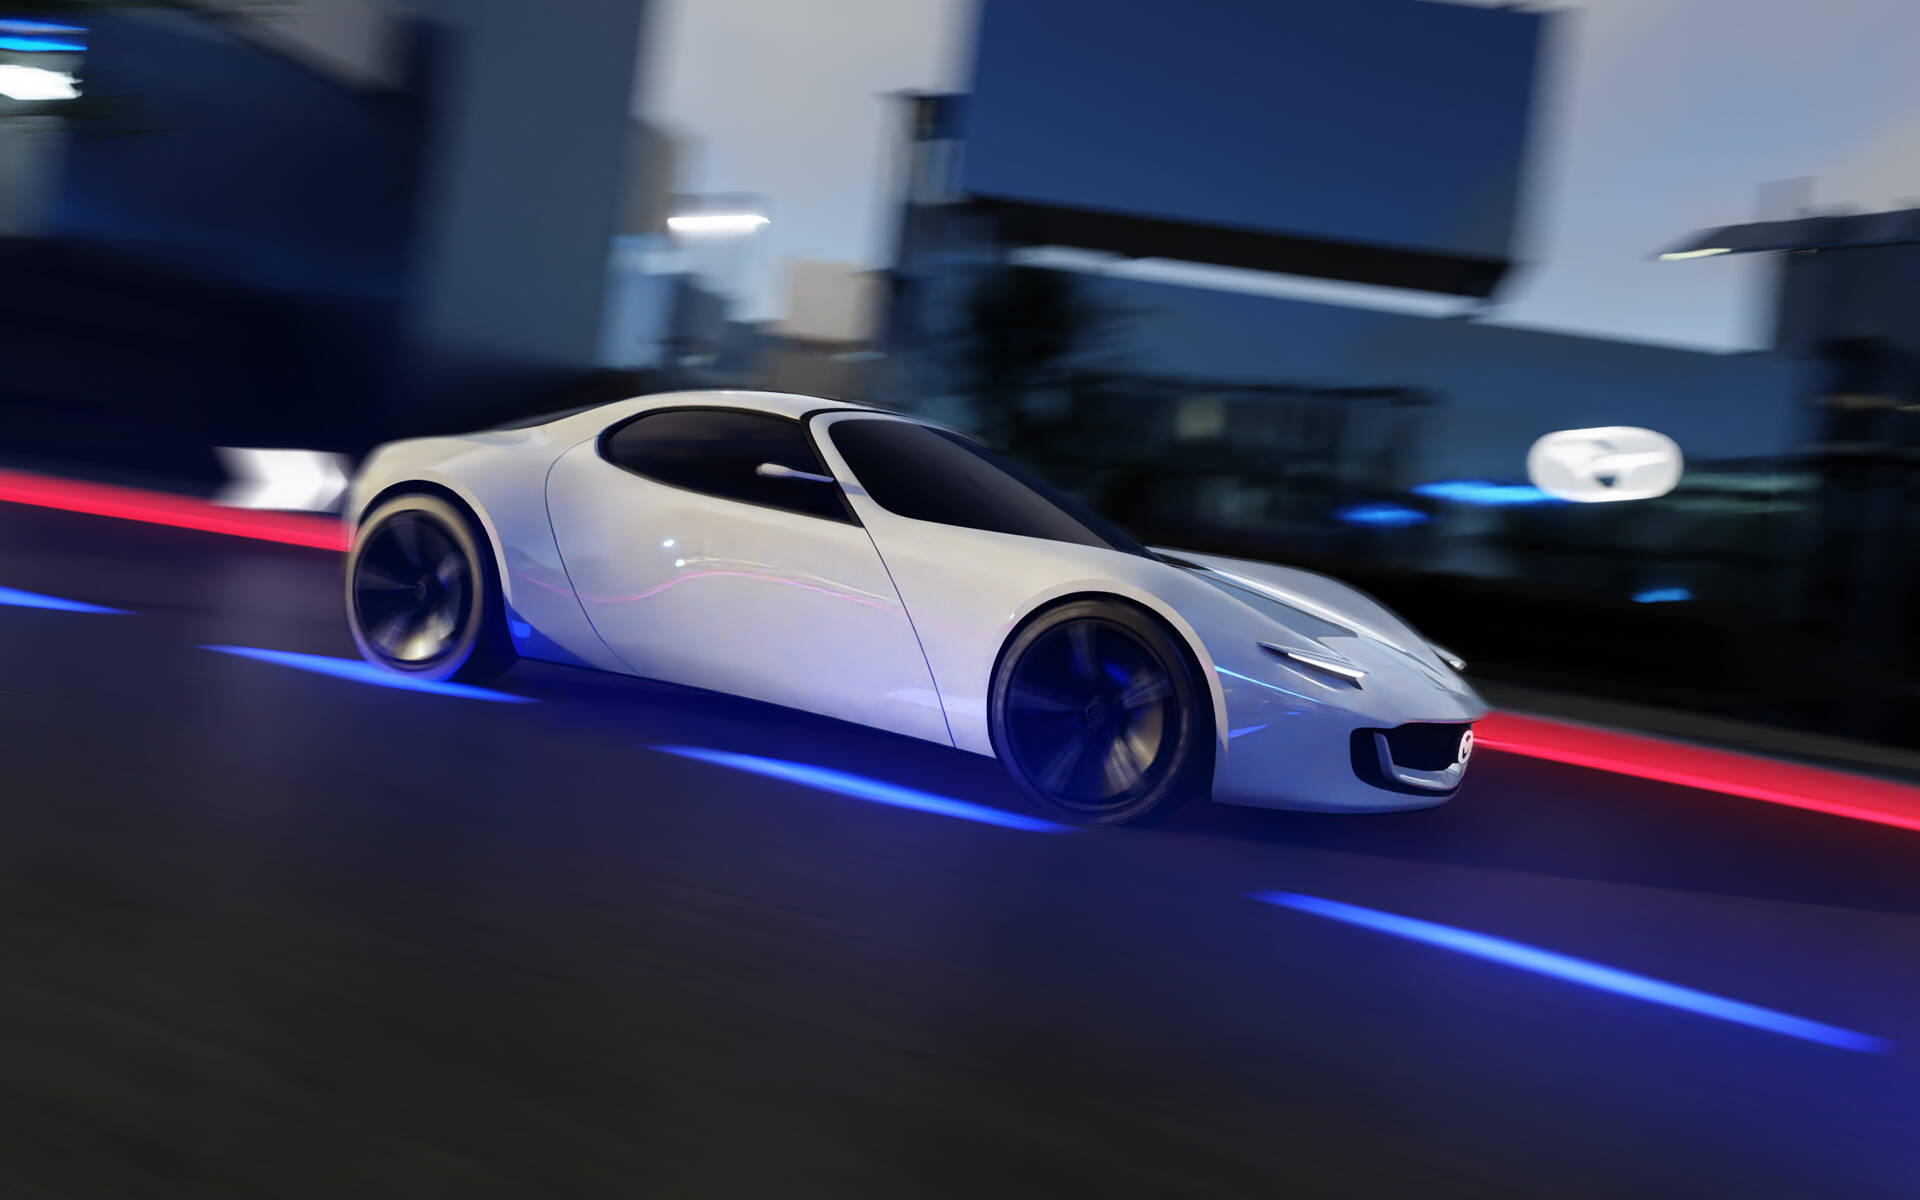 Mazda Vision Study : un aperçu d’une future MX-5 électrique ? 551550-mazda-vision-study-un-apercu-d-une-future-mx-5-electrique